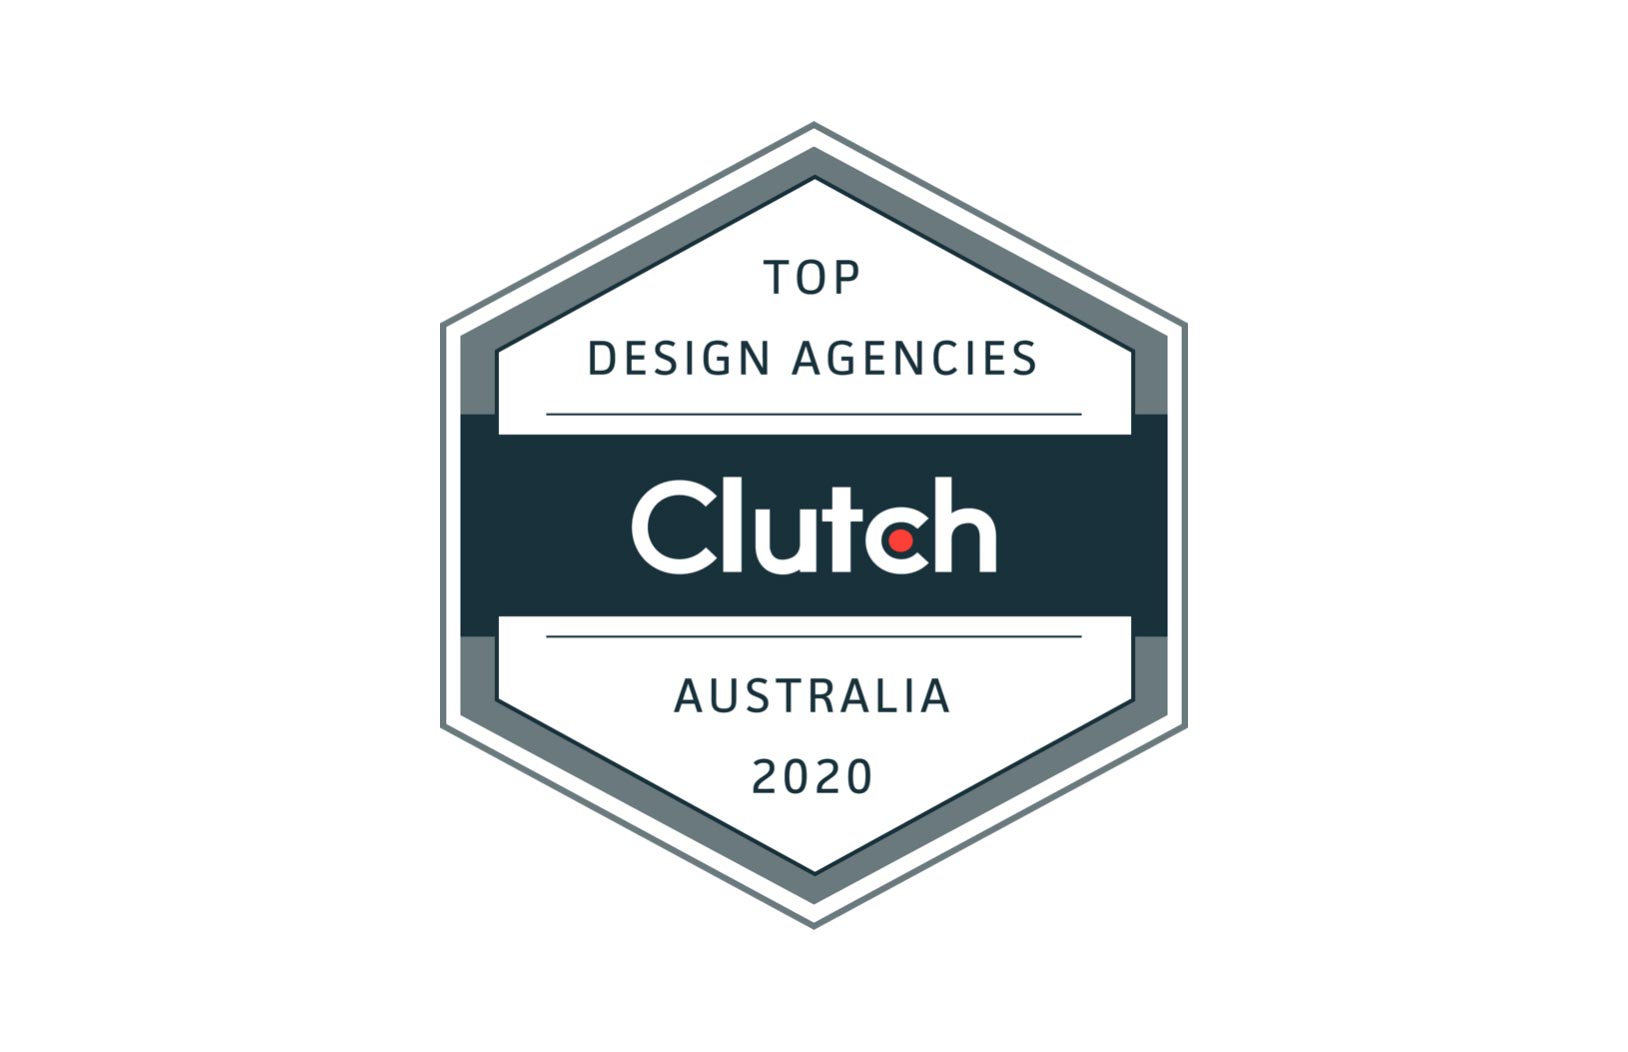 Clutch Top Design Agencies Australia 2020